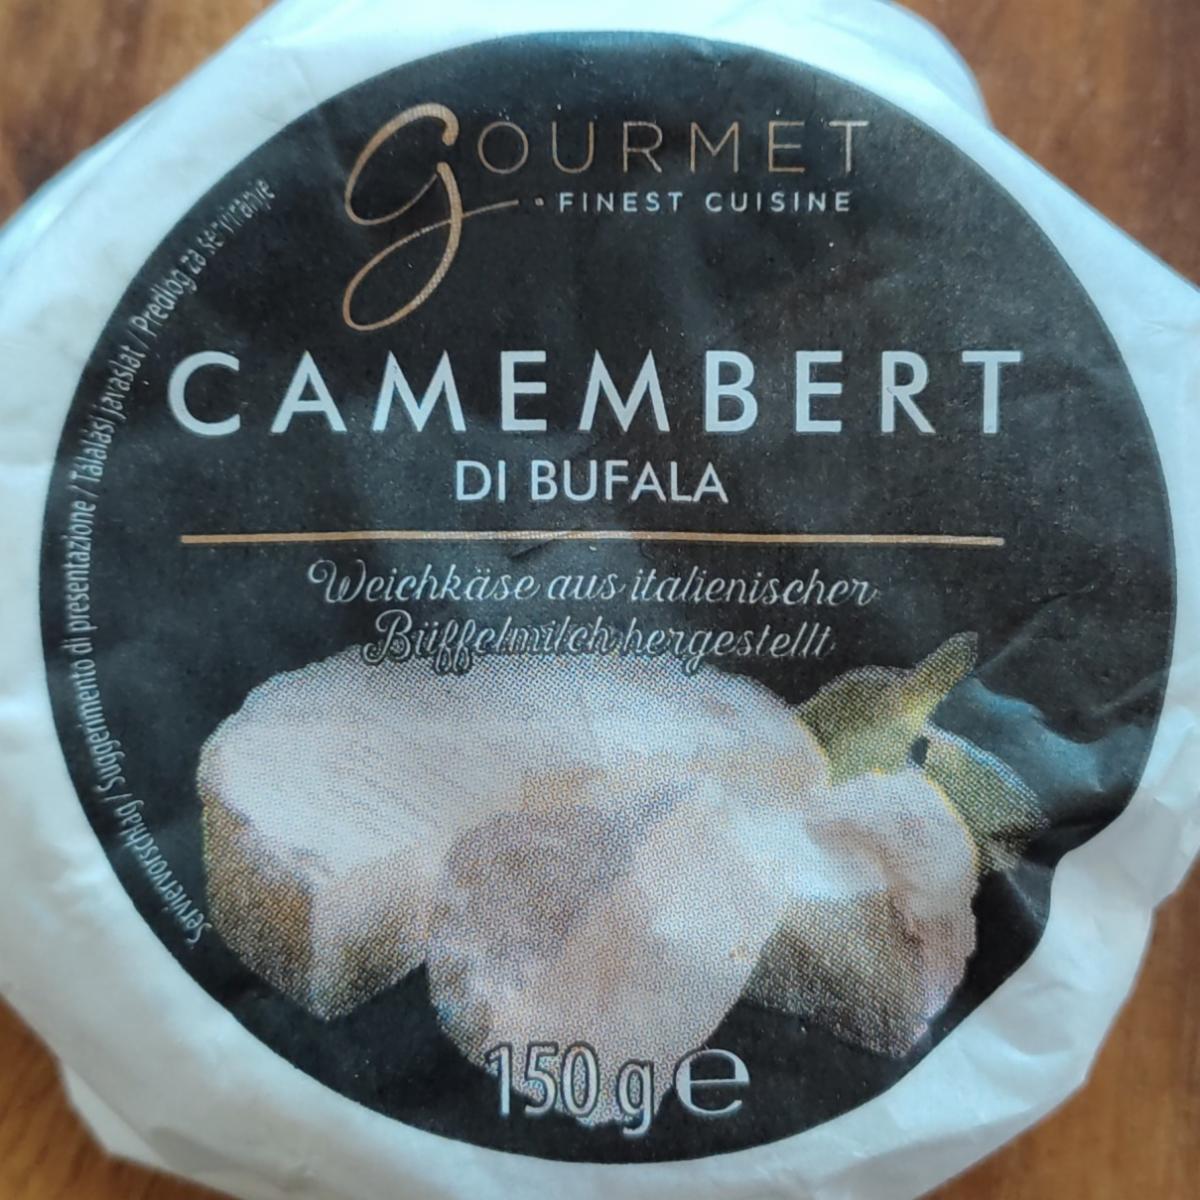 Fotografie - Camembert di bufala Gourmet finest cuisine